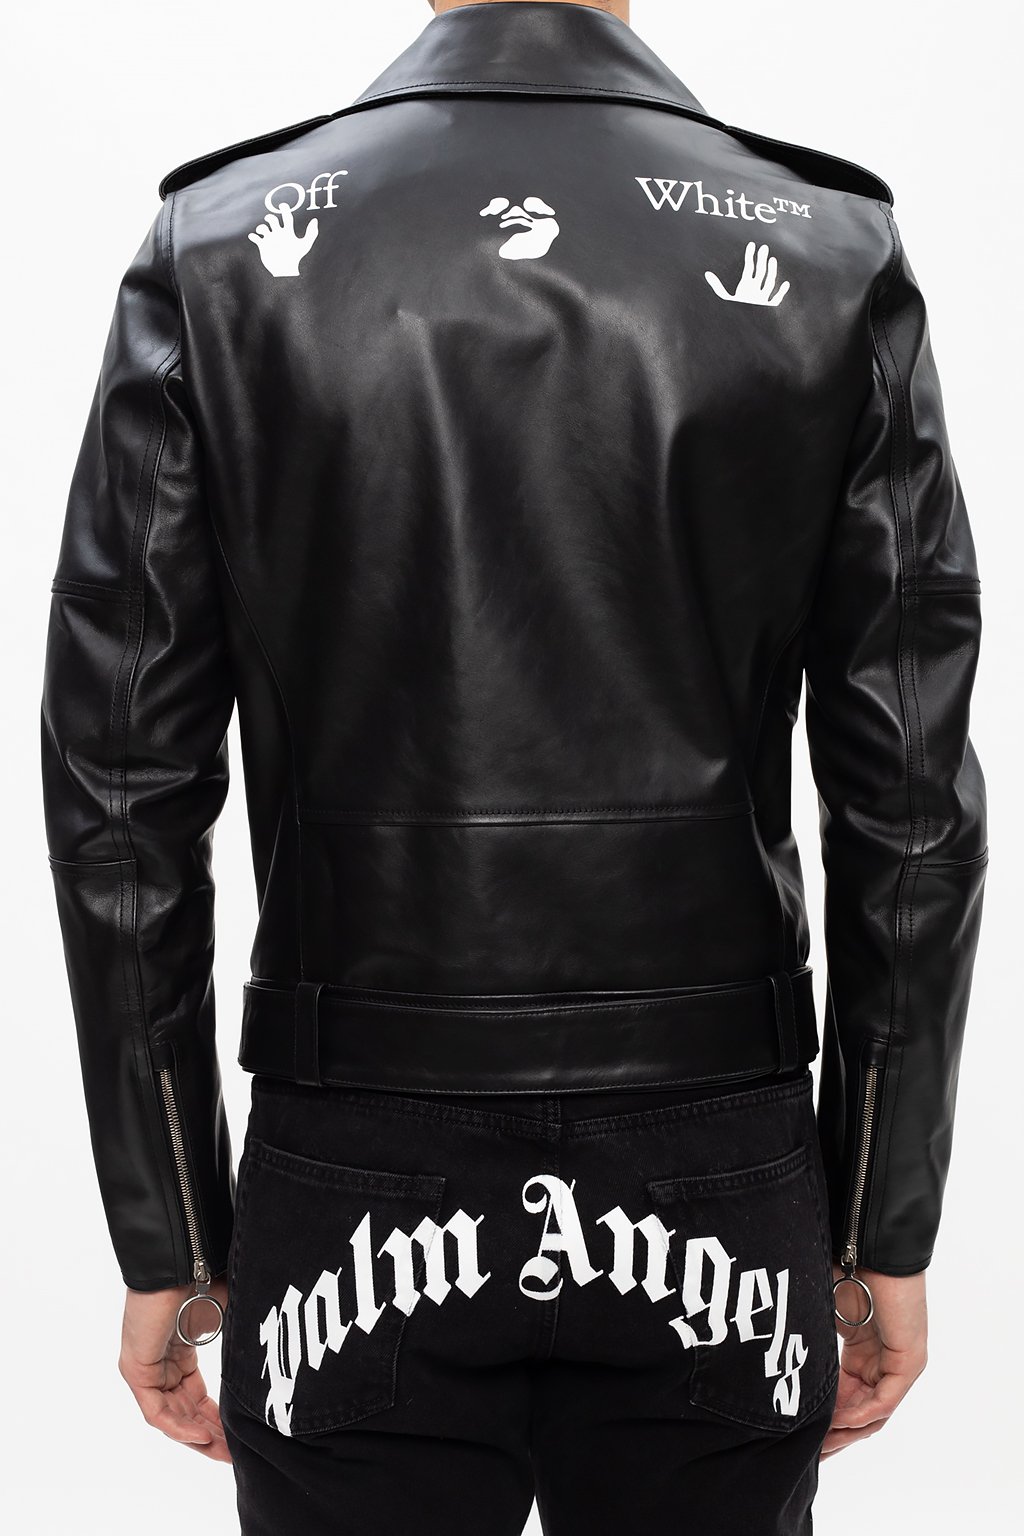 Off-White Leather jacket with logo, Men's Clothing